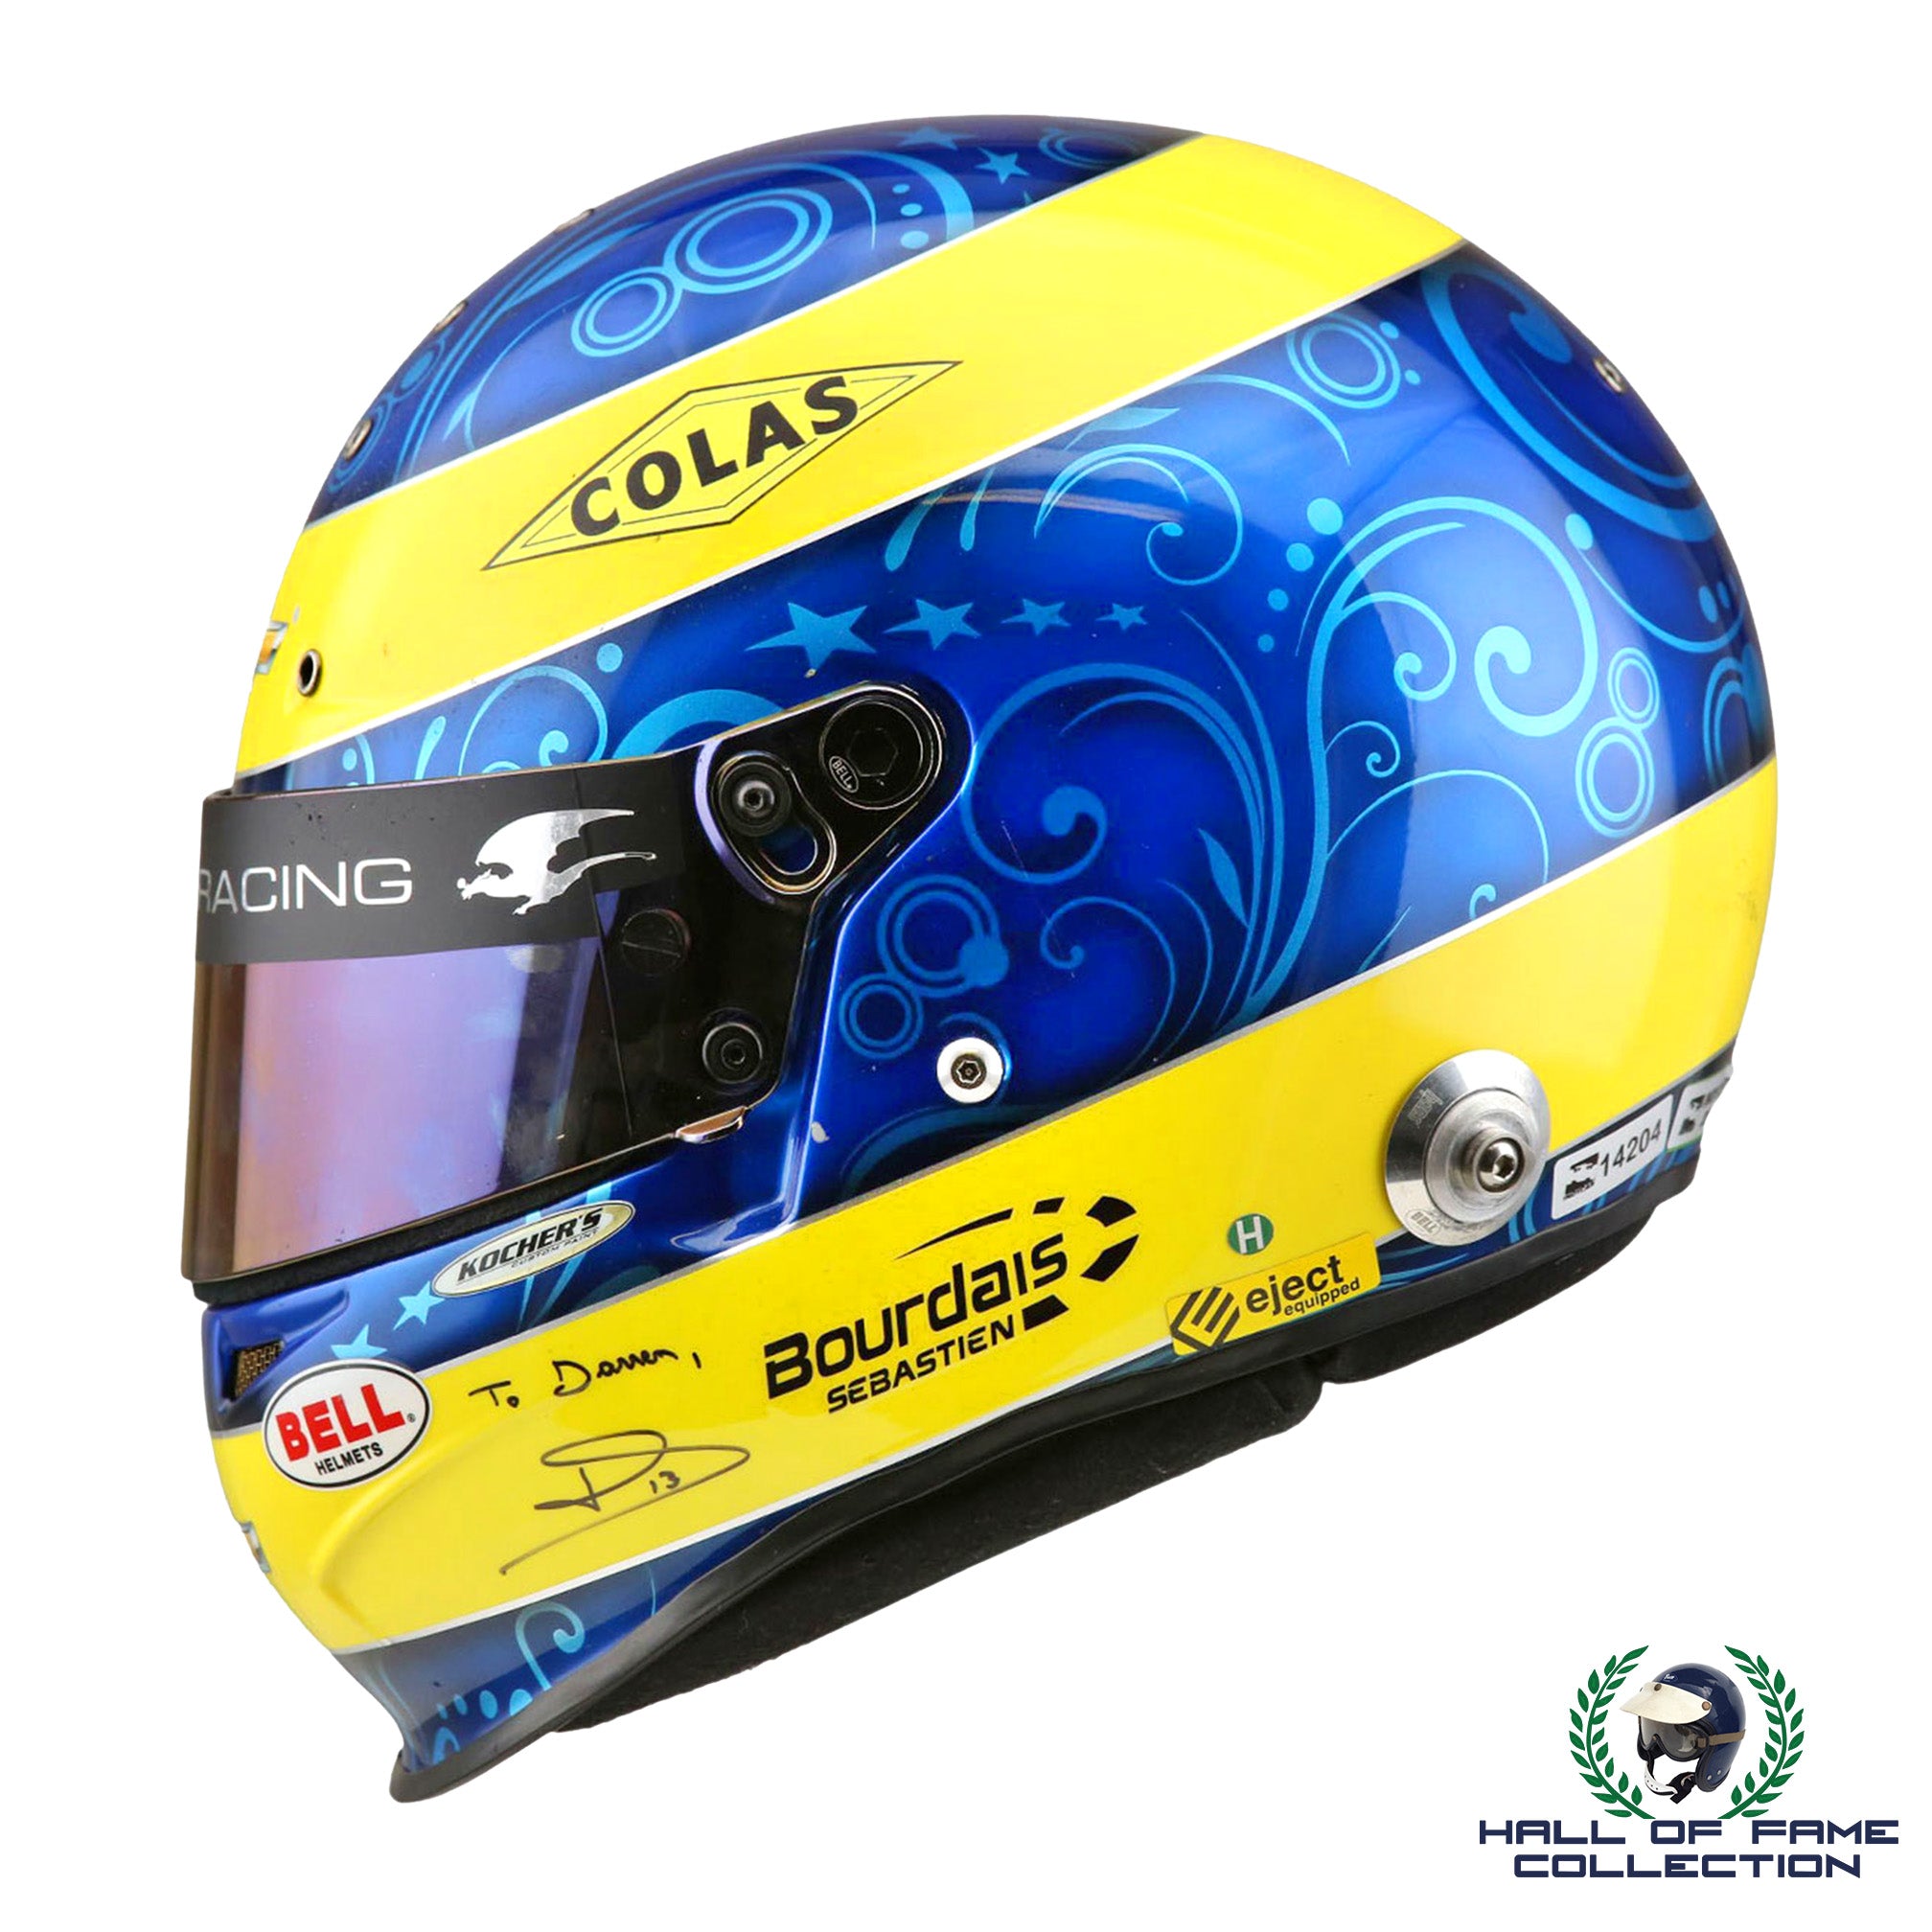 2012/13 Sebastien Bourdais Signed Race Used Dragon Racing Helmet, Suit, Gloves & Boots Set